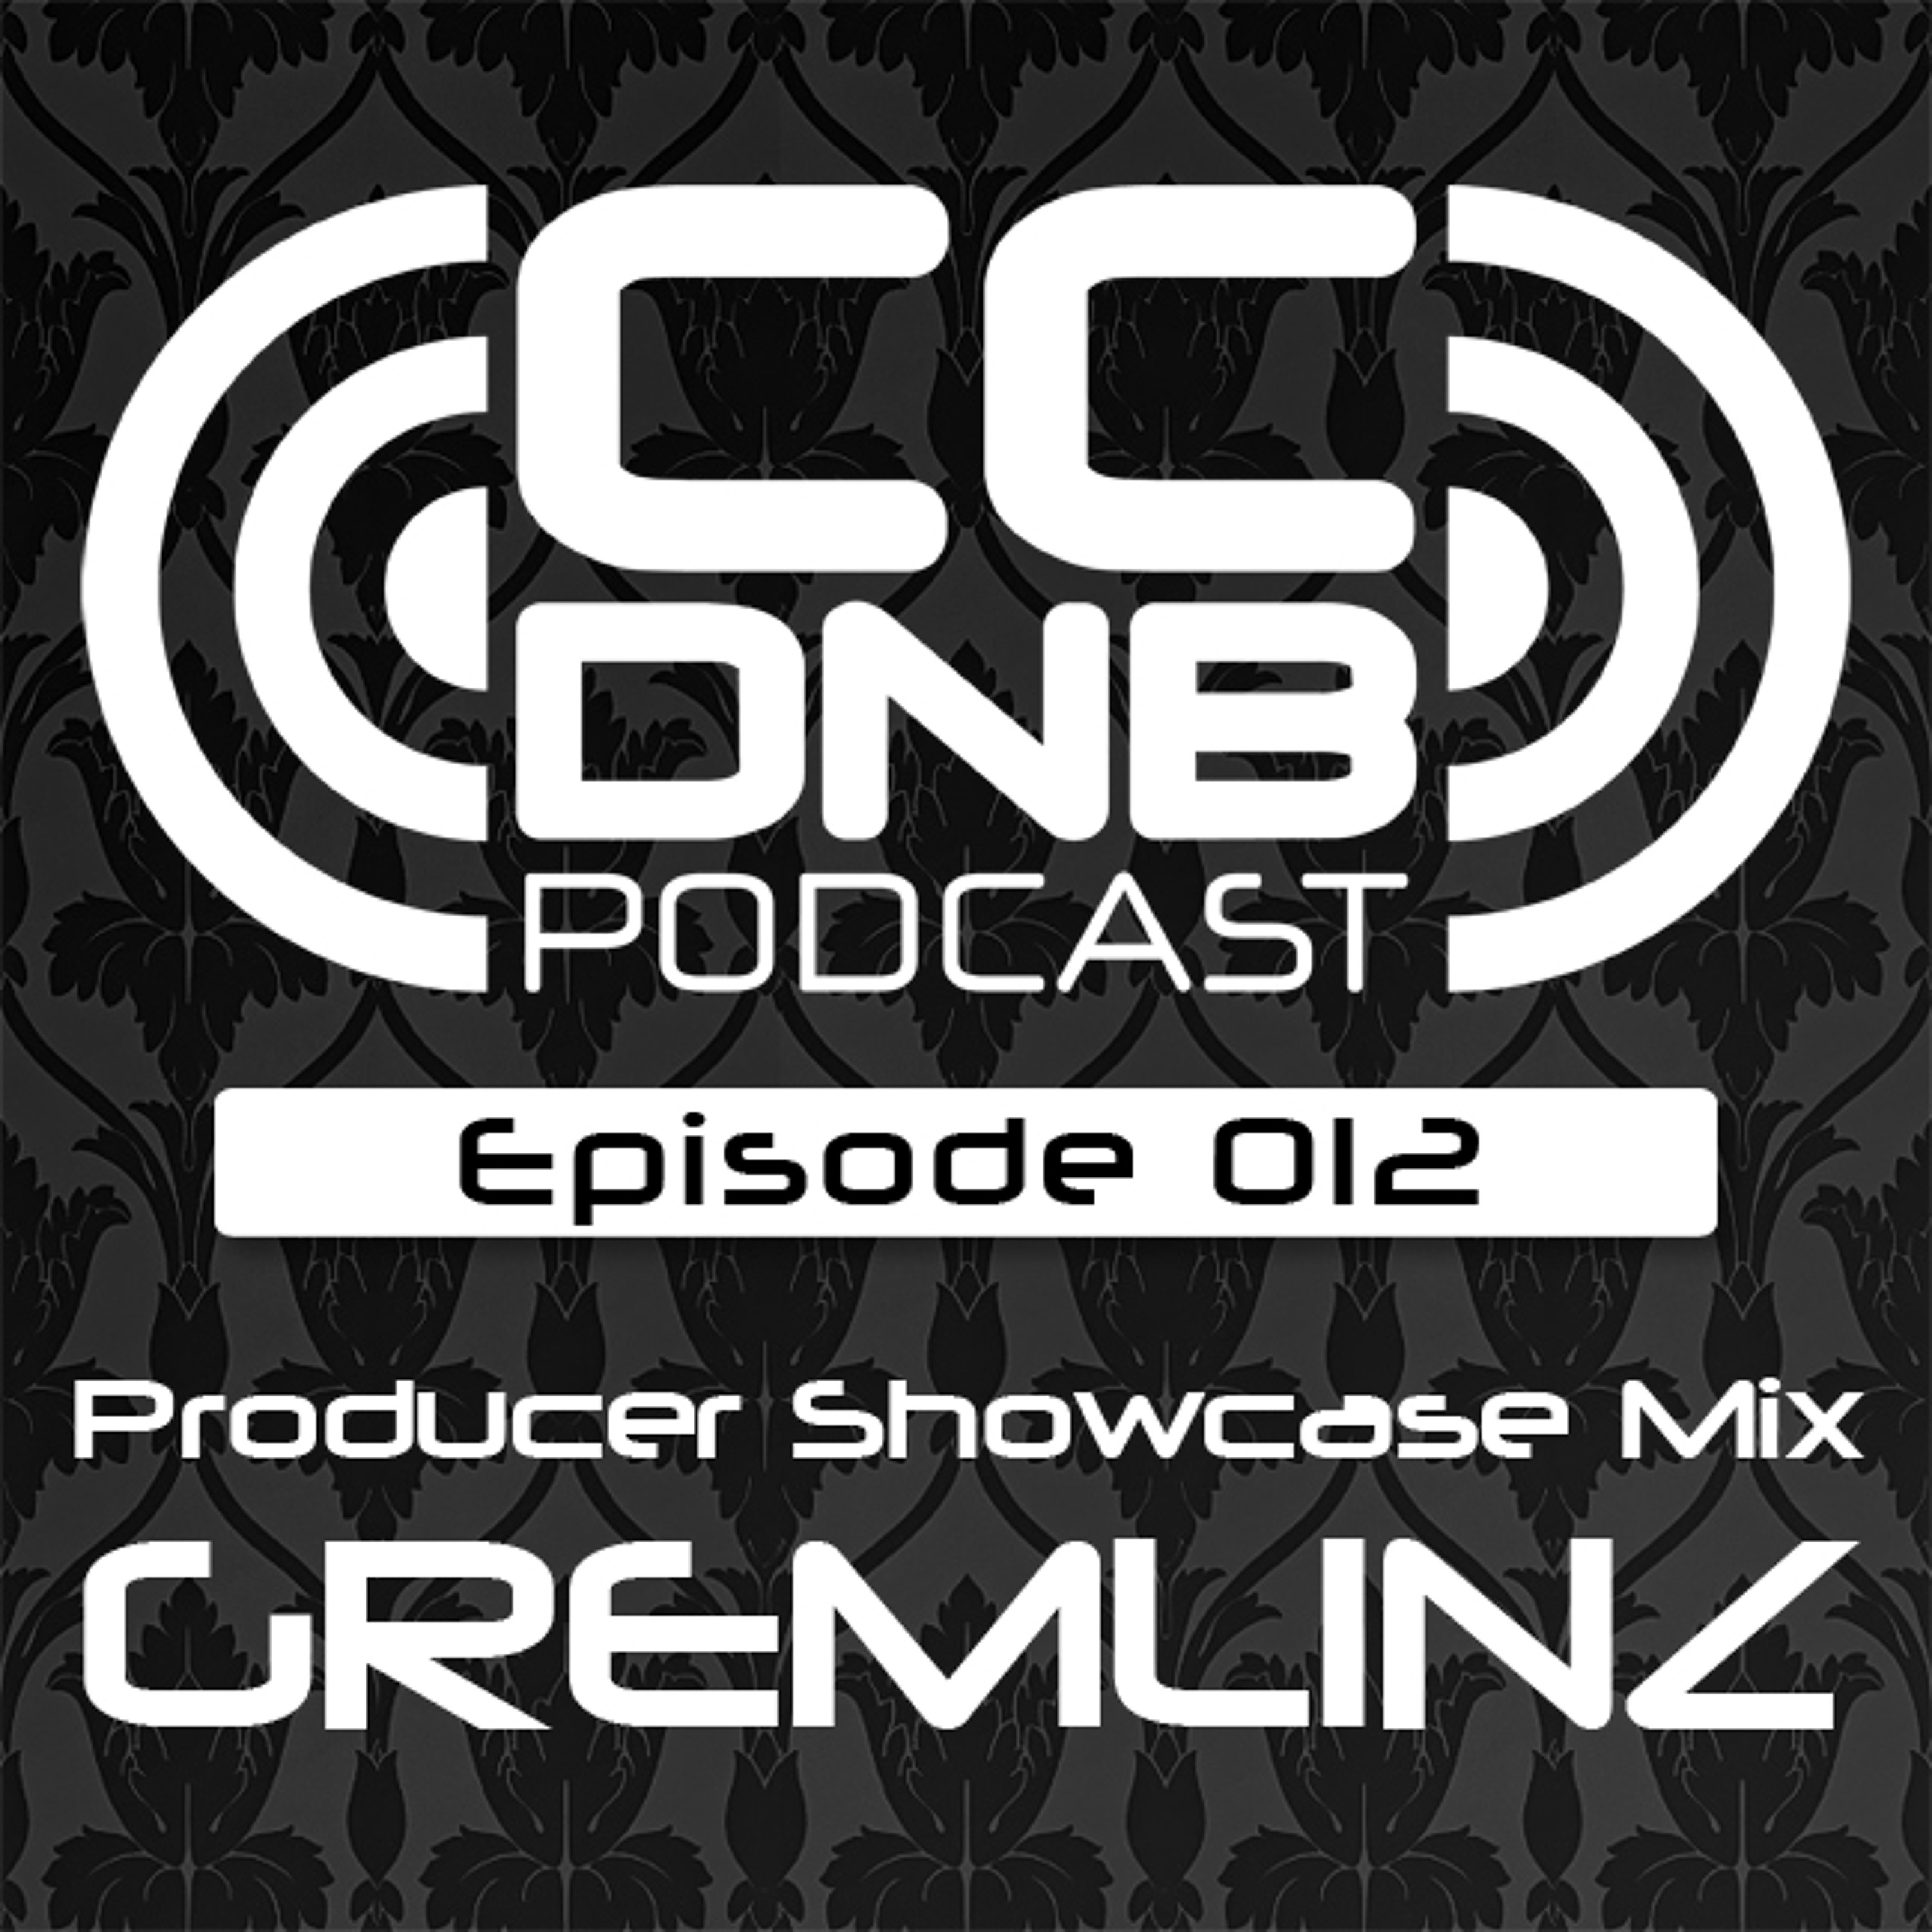 CCDNB 012 Prodcucer showcase mix featuring GREMLINZ